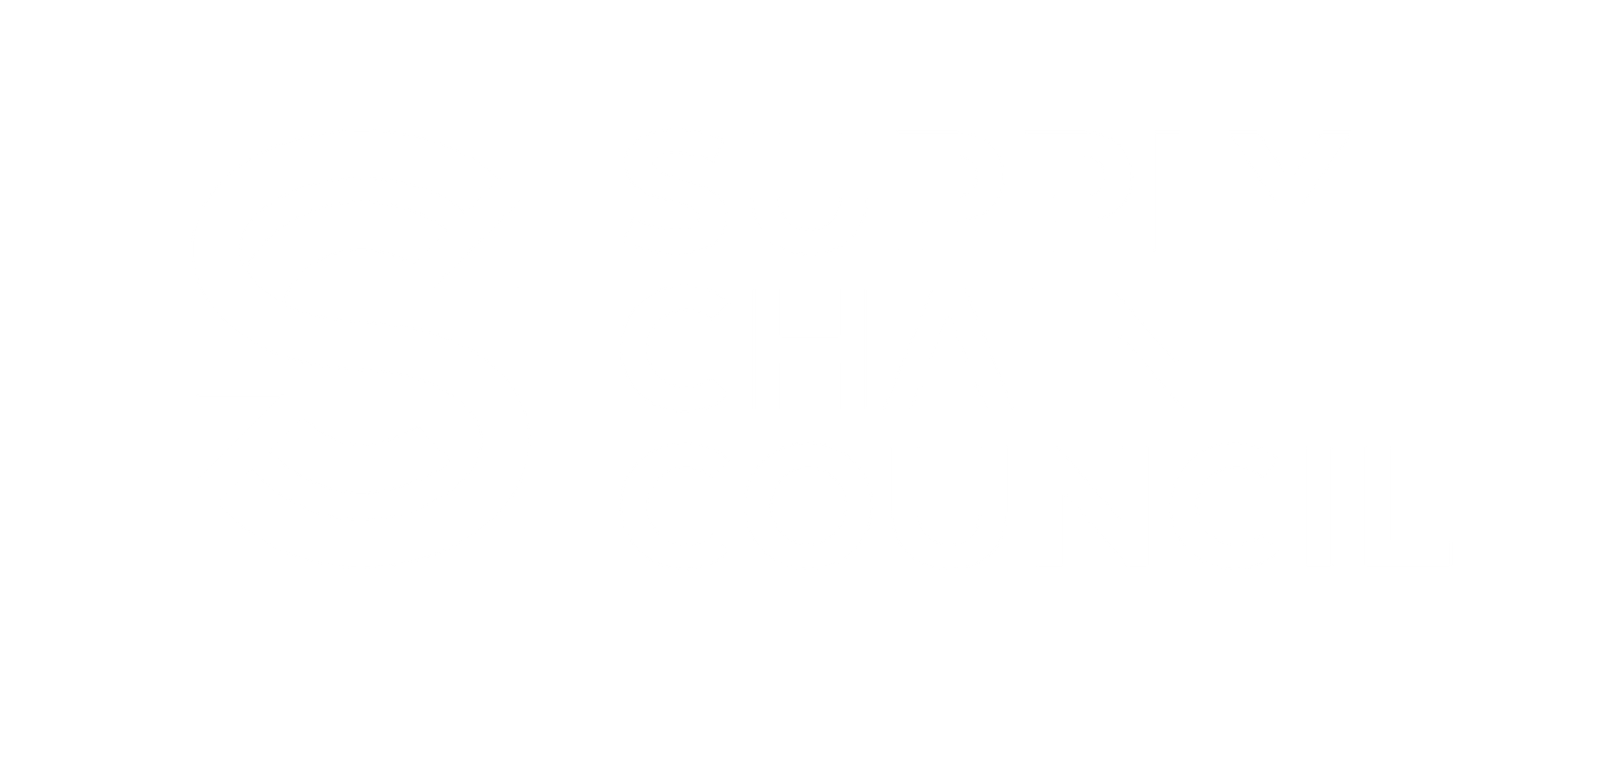 Supply Chain Council